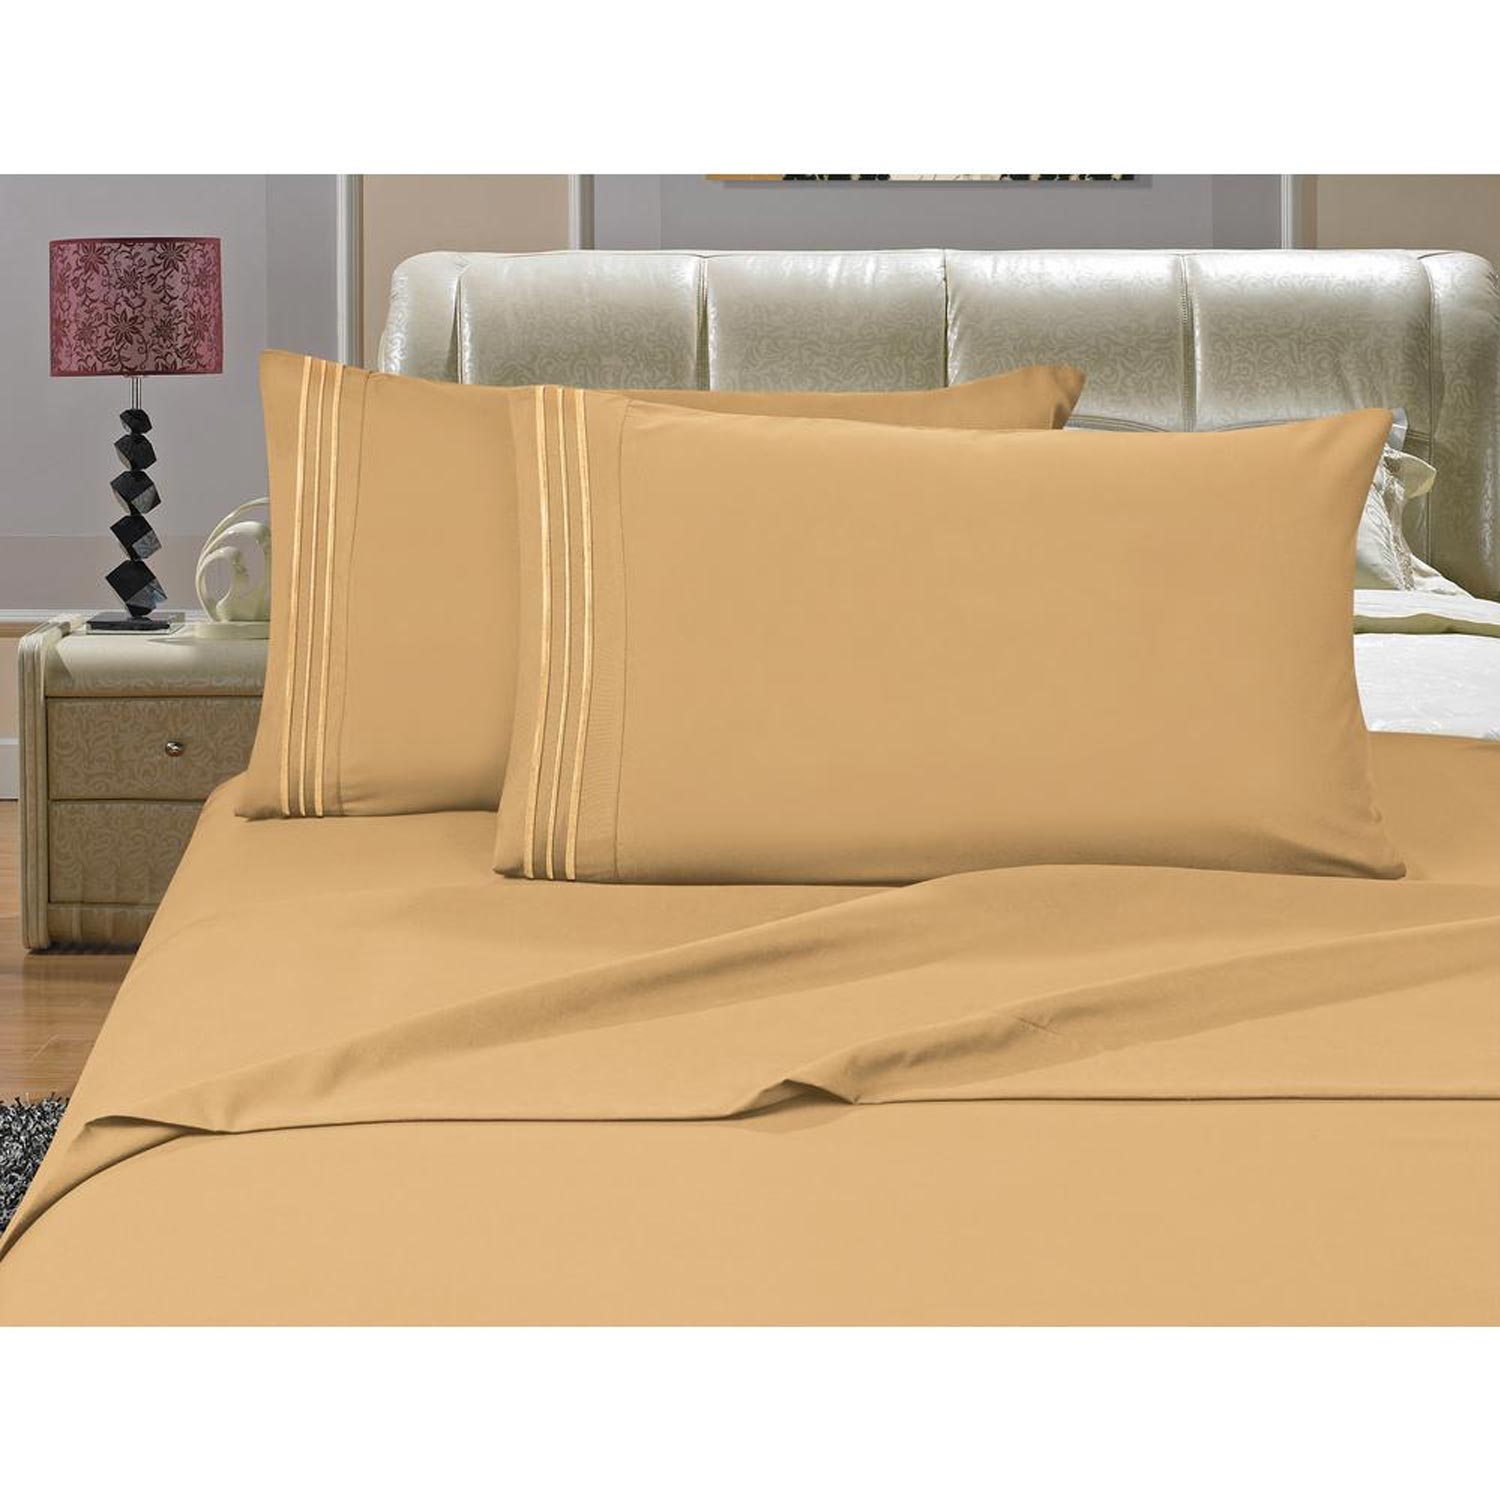 Elegant Comfort 1500 Thread Count 4 pcs Bed Sheet Set, Deep Pocket Up to 16" 